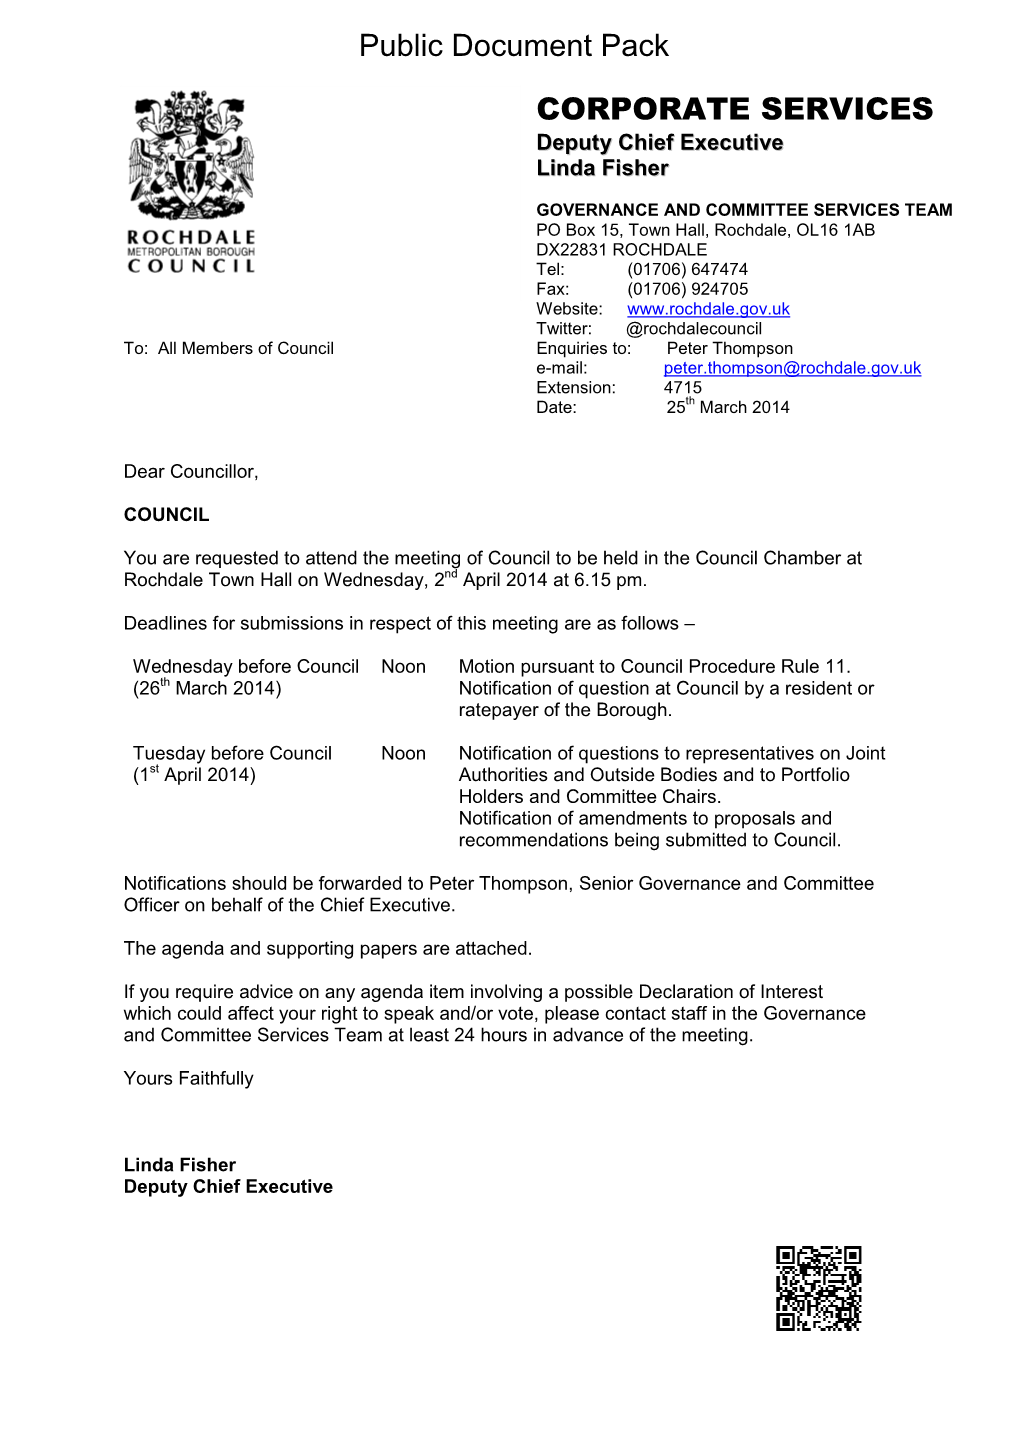 (Public Pack)Agenda Document for Council, 02/04/2014 18:15